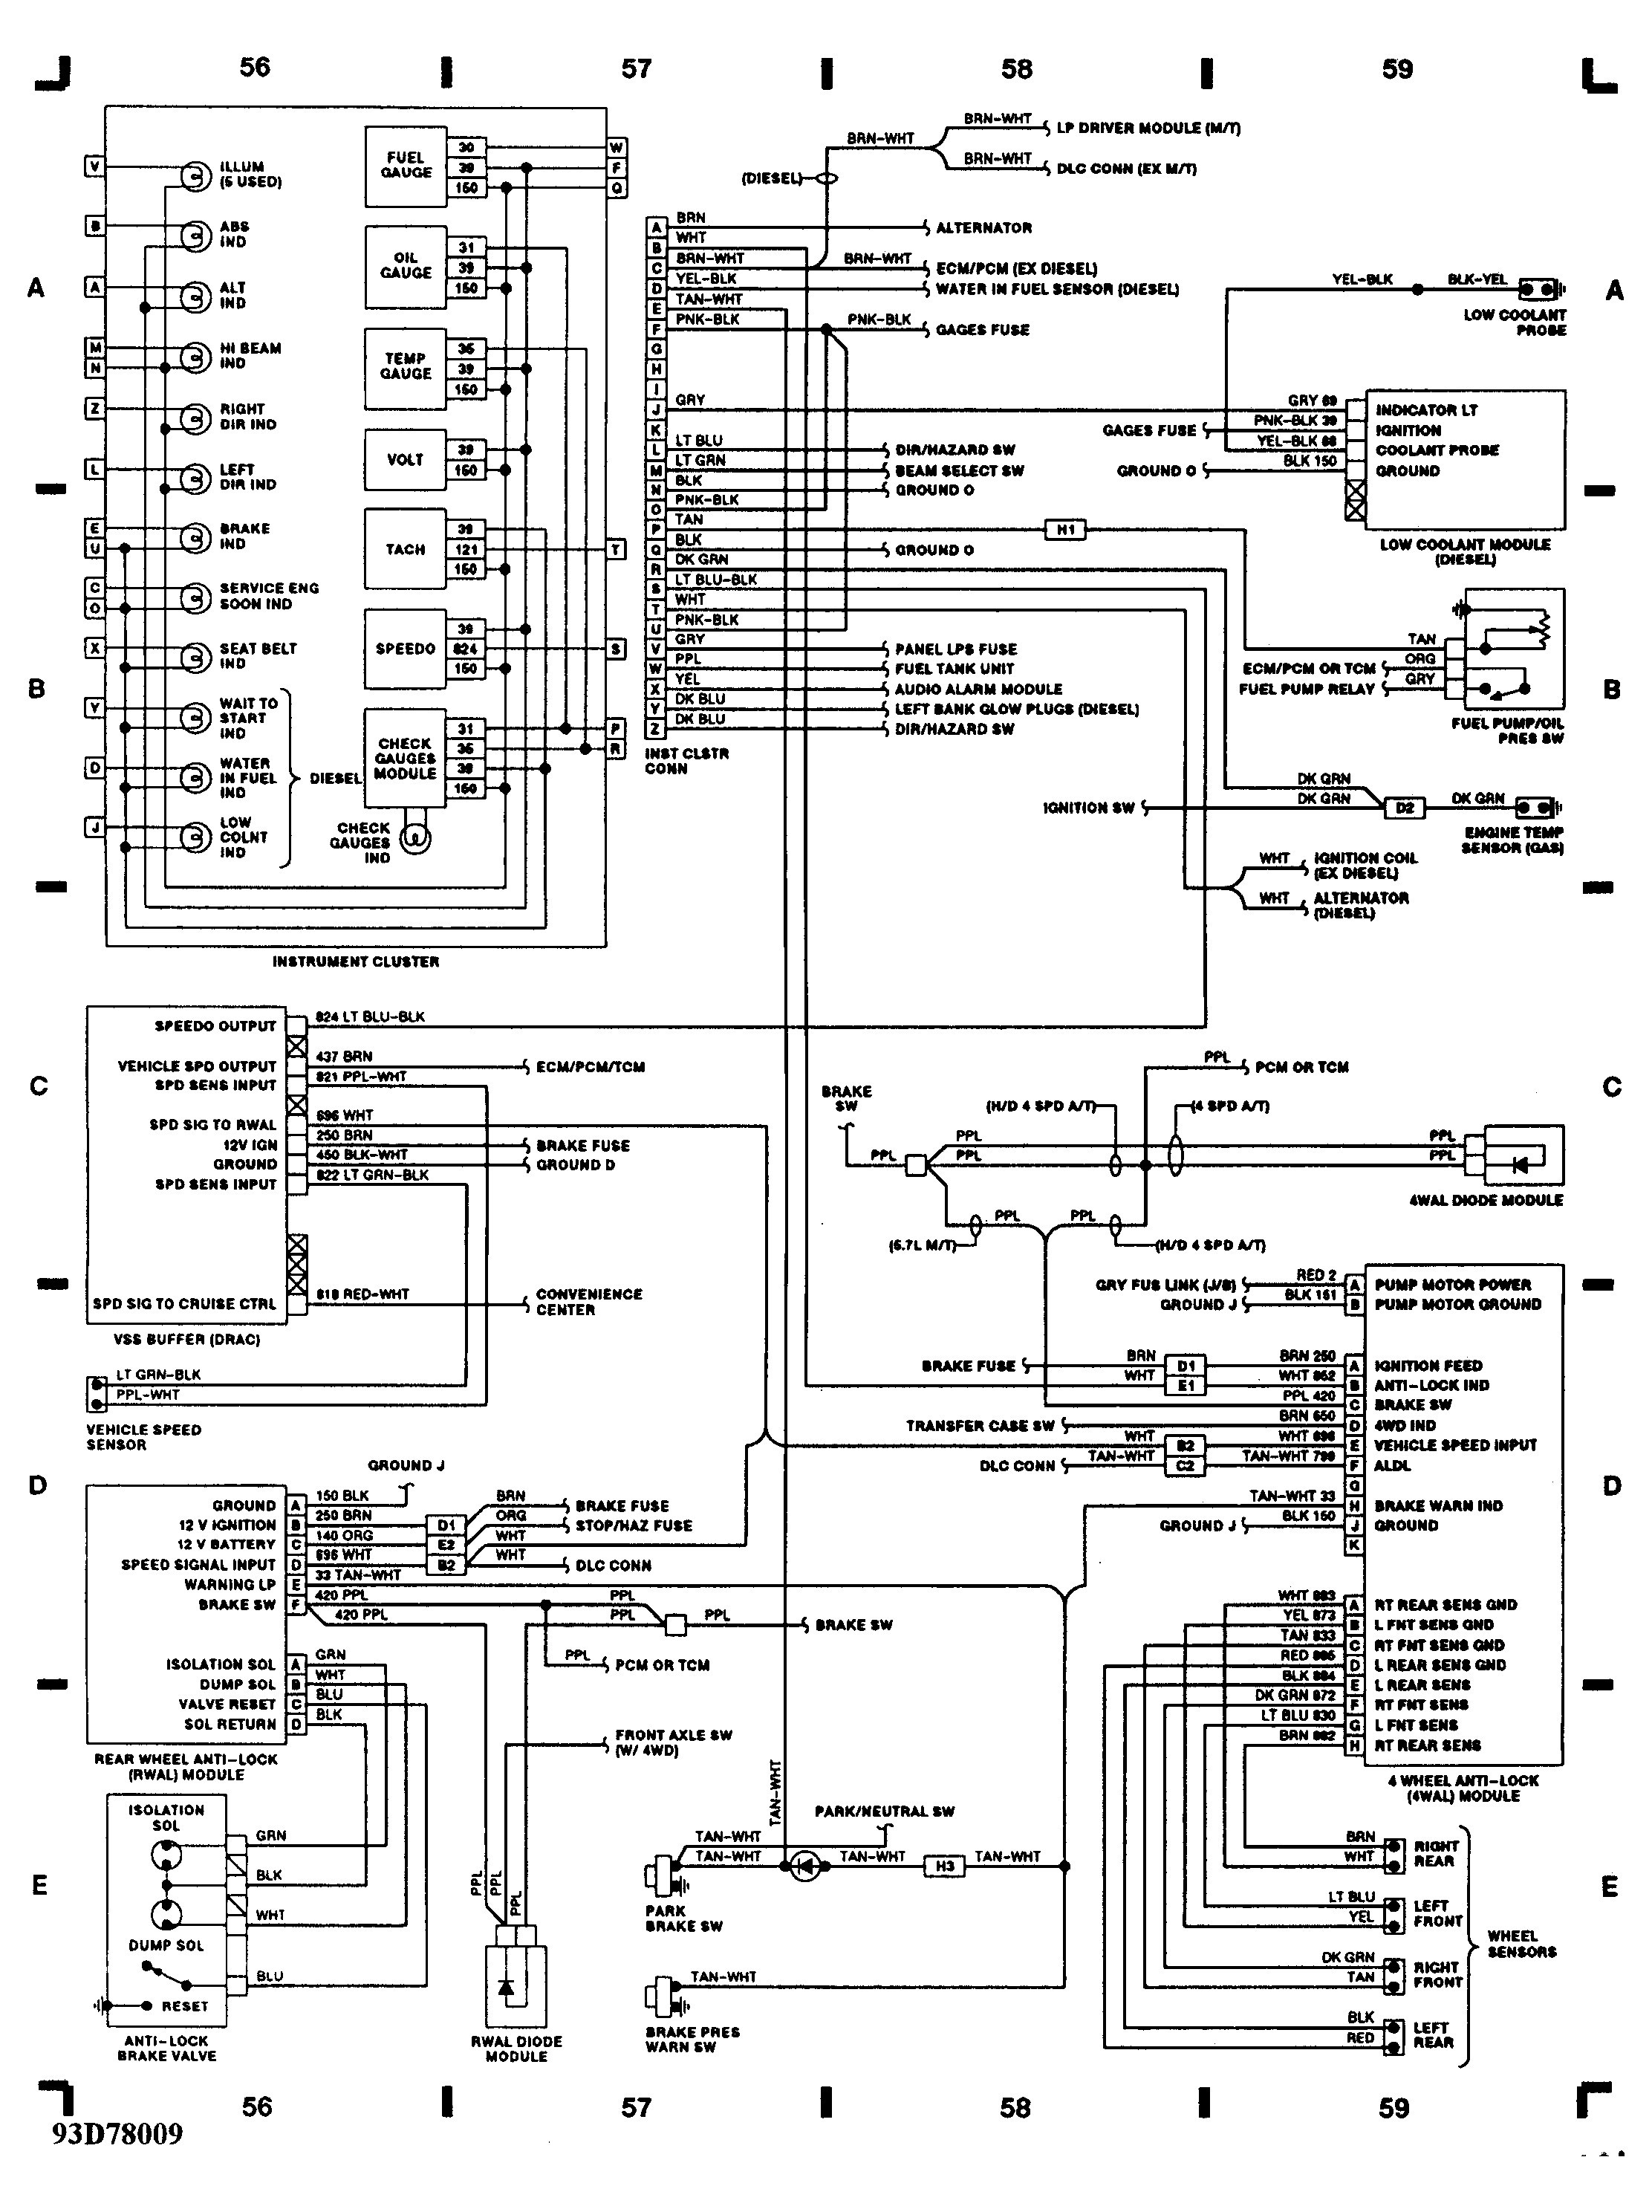 2007 Toyota Camry Radio Wiring Diagram from detoxicrecenze.com